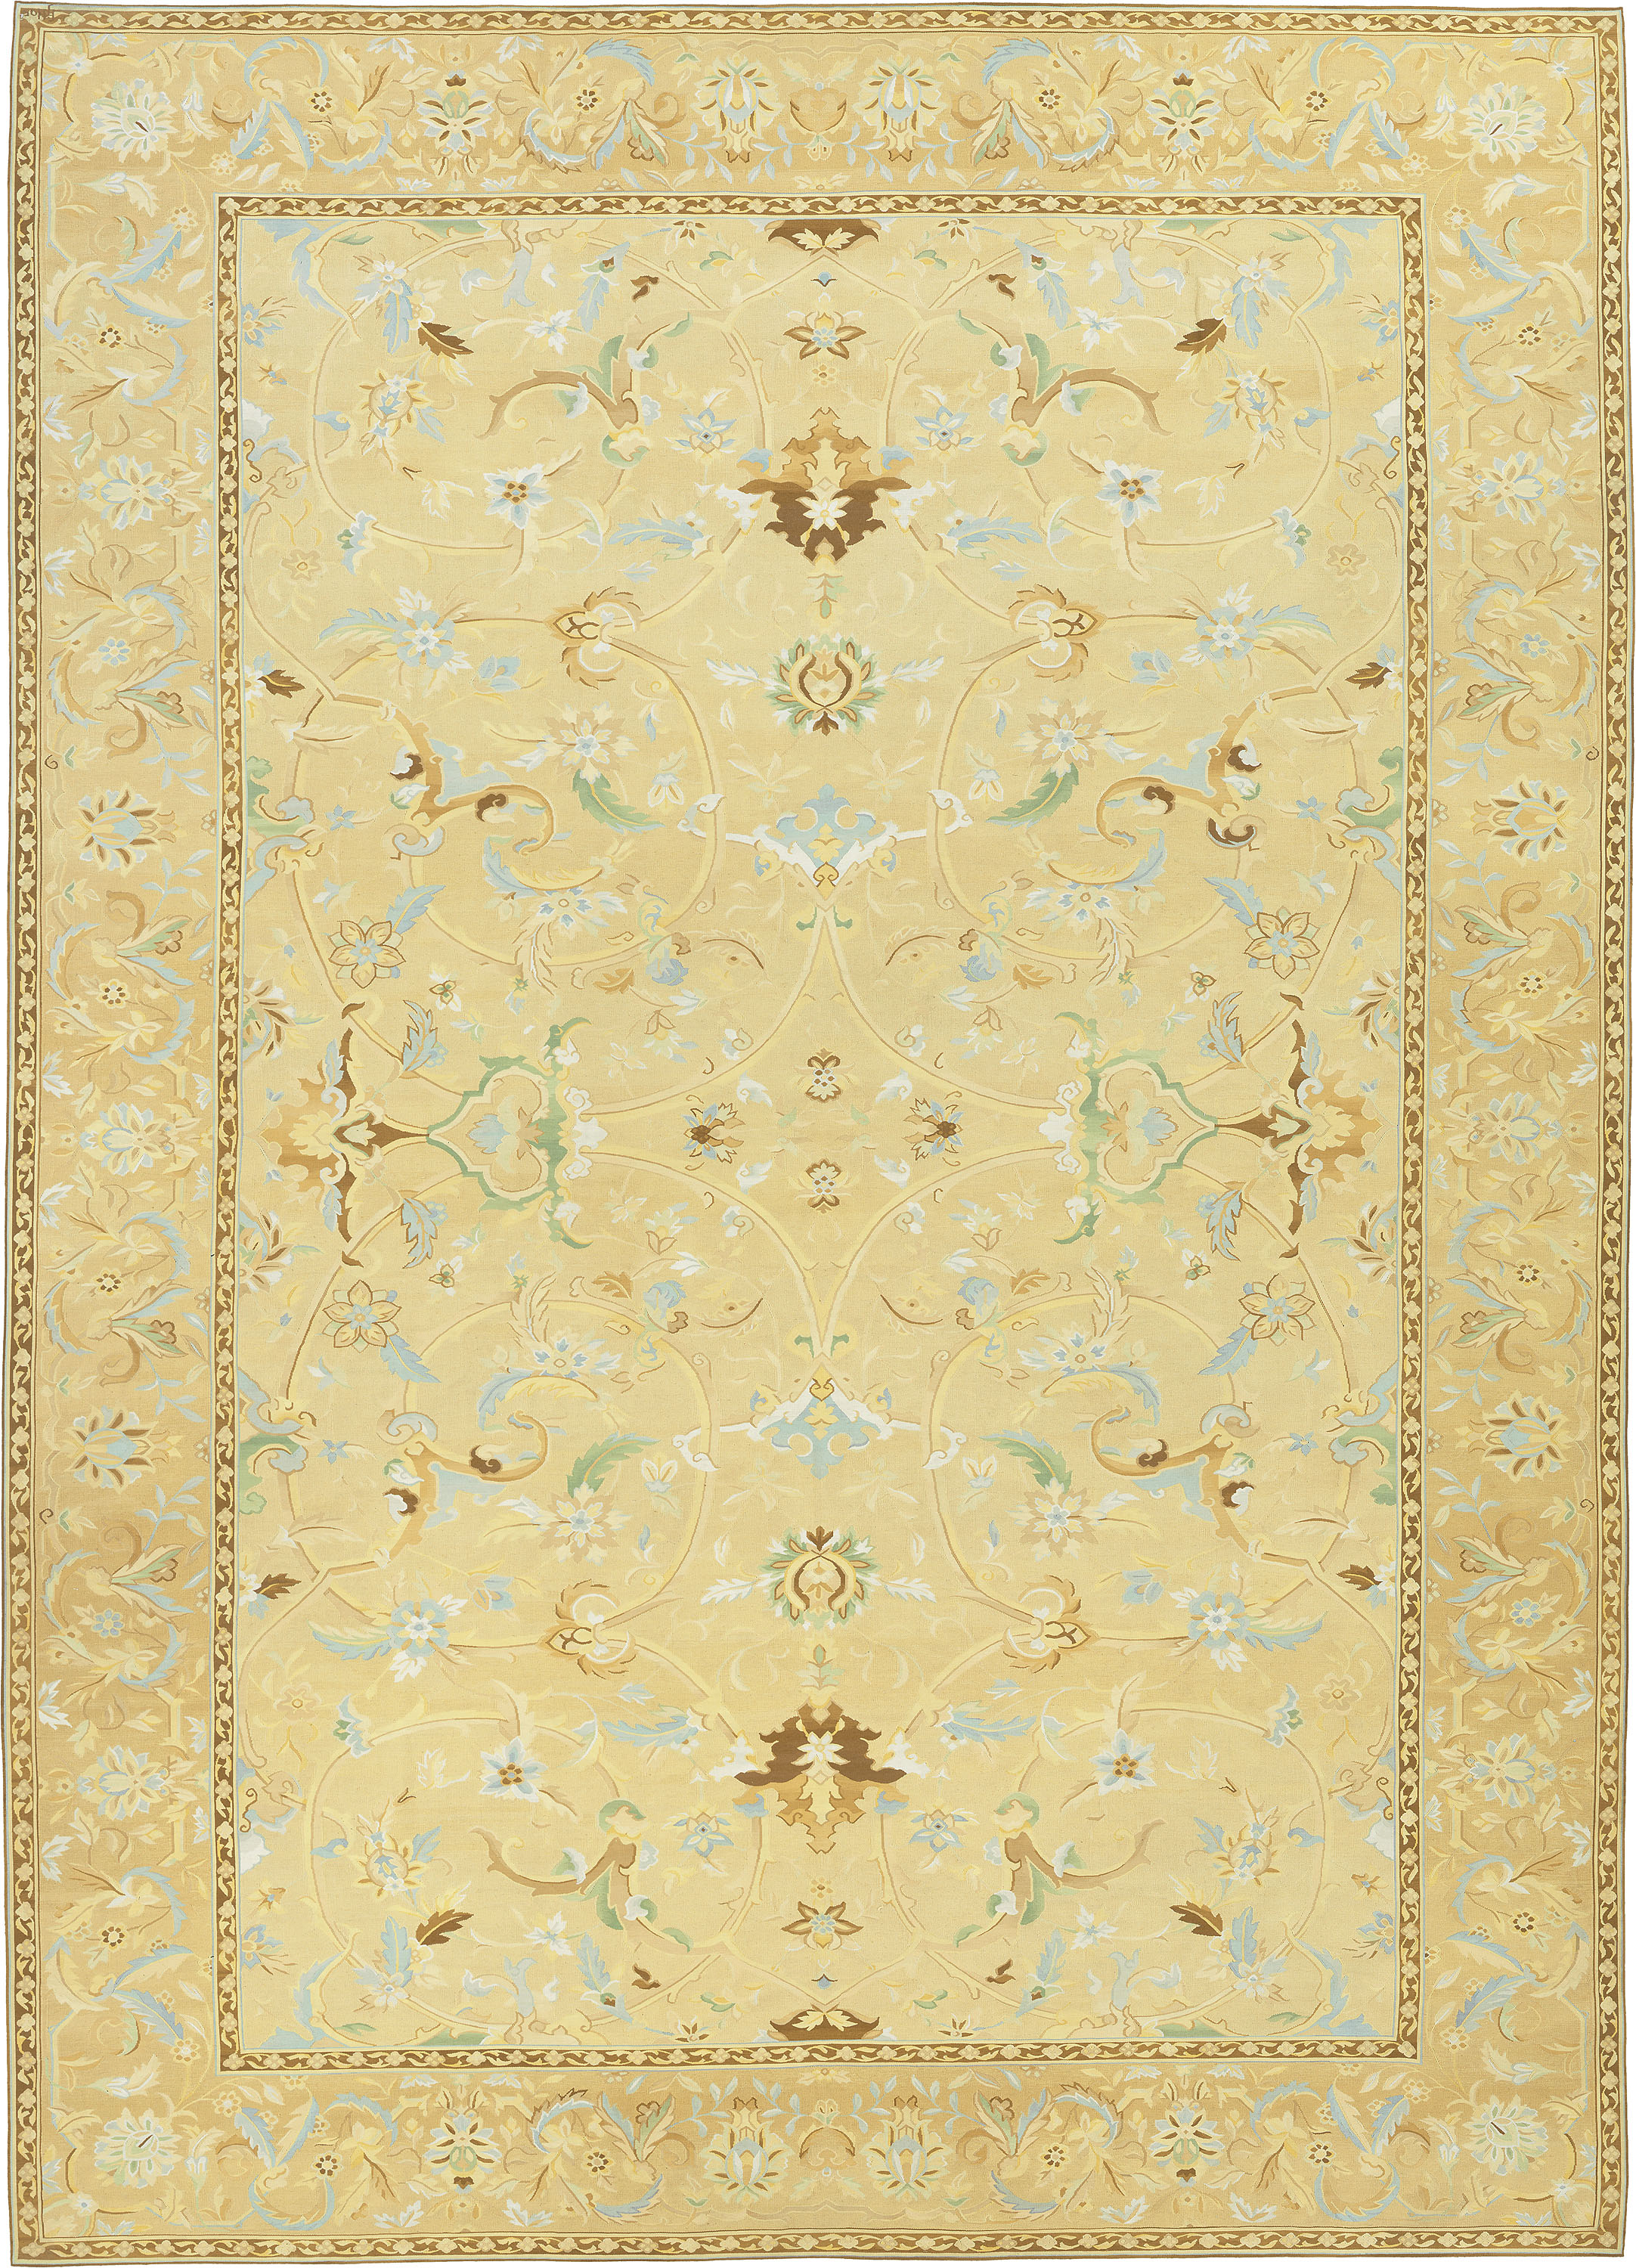 16670 Sassoon | Custom Traditional Design Carpet | FJ Hakimian | Carpet Gallery in NYC